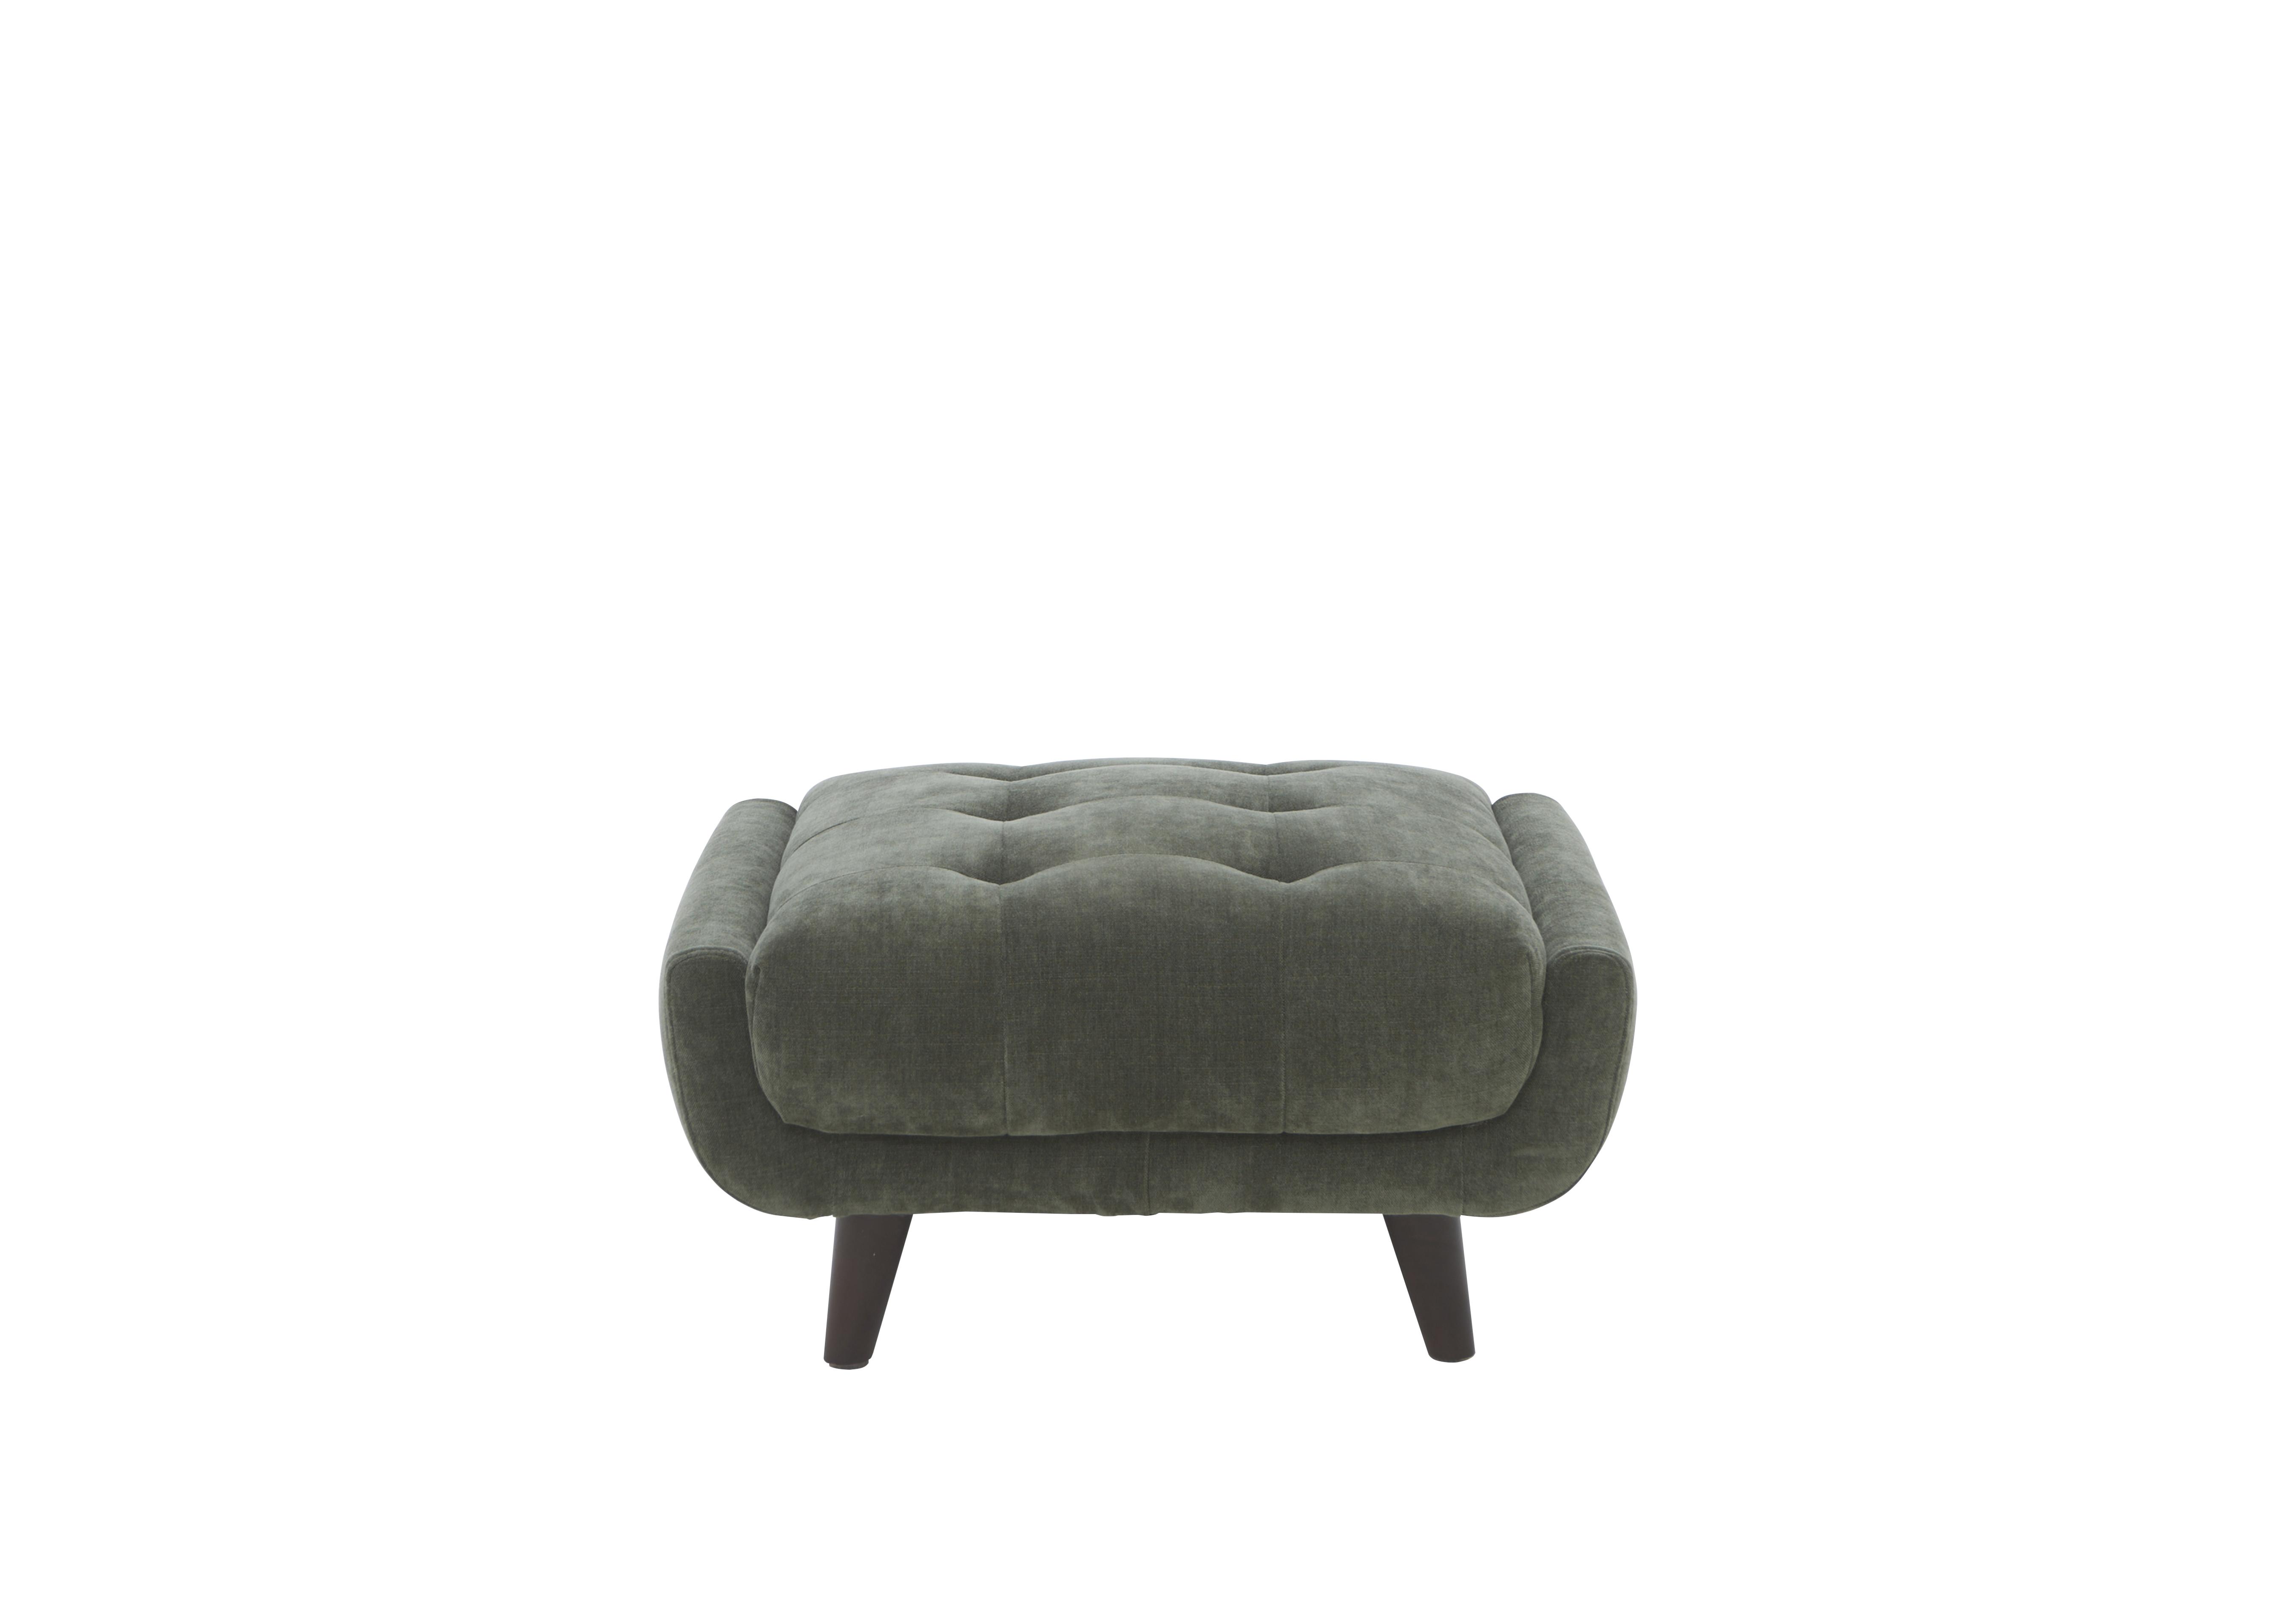 Rene Small Fabric Footstool in Manhattan 58001 Pine Es Ft on Furniture Village